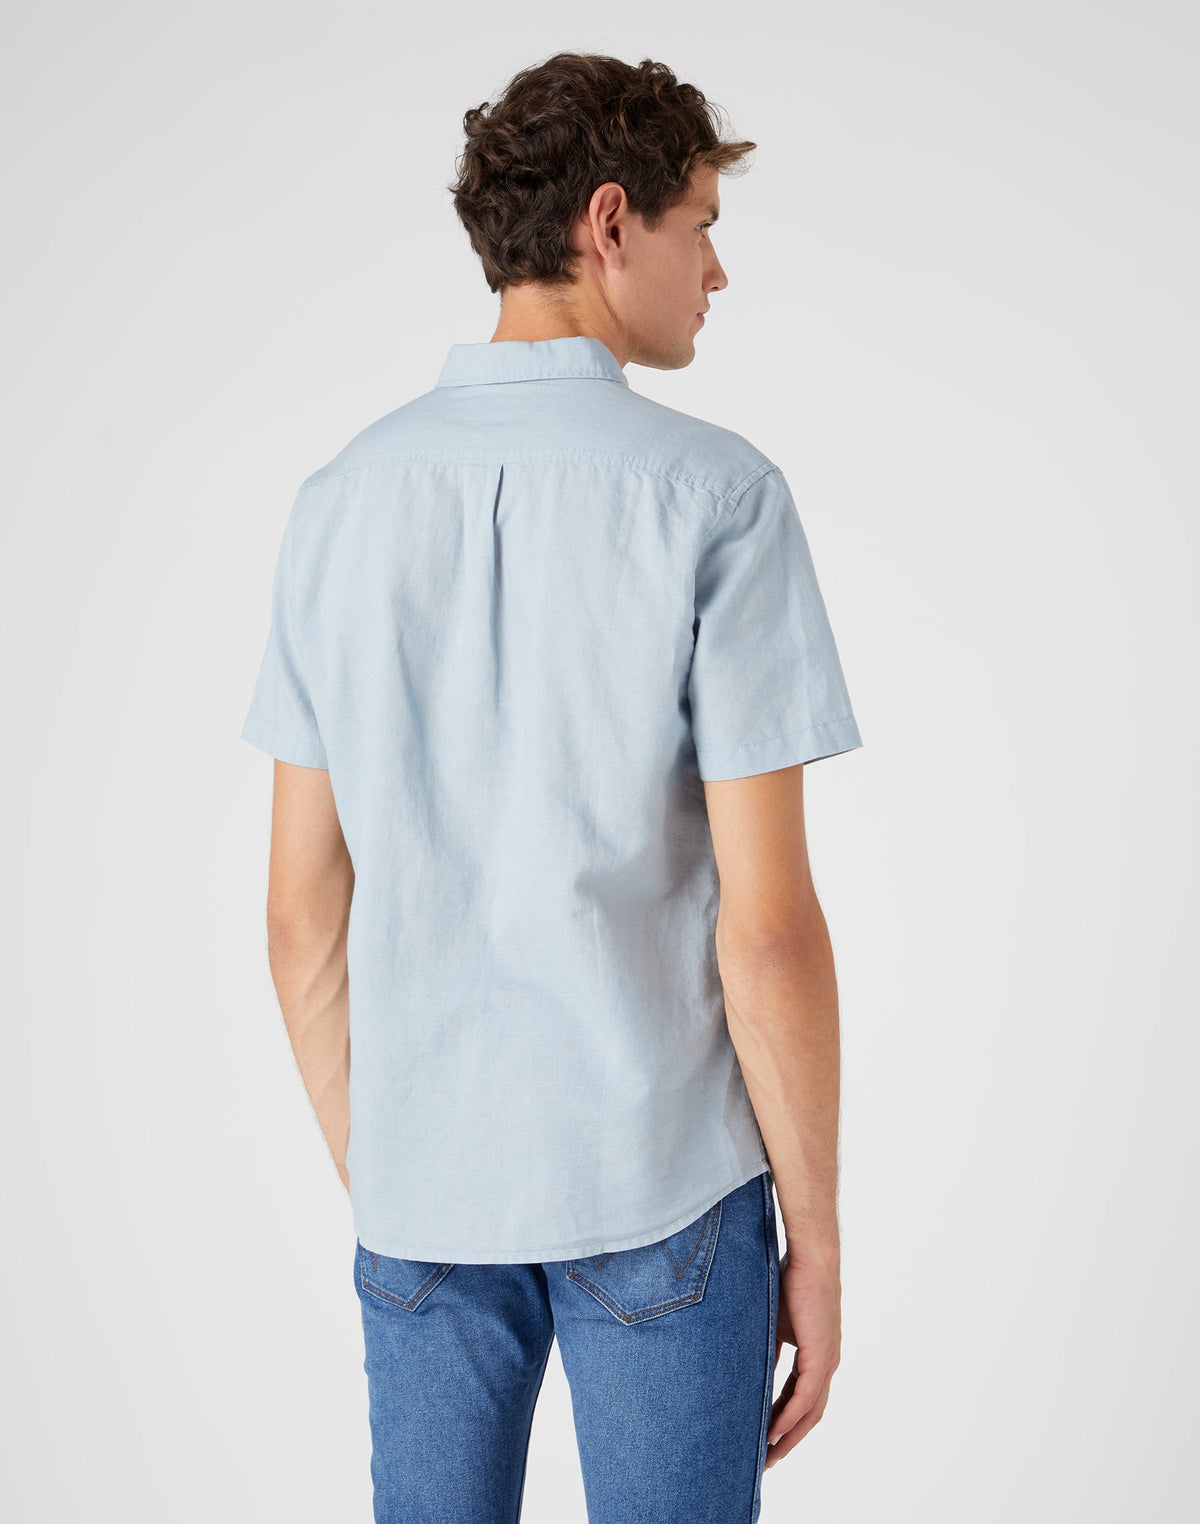 Kurzarm One Pocket Shirt in Blue Fog